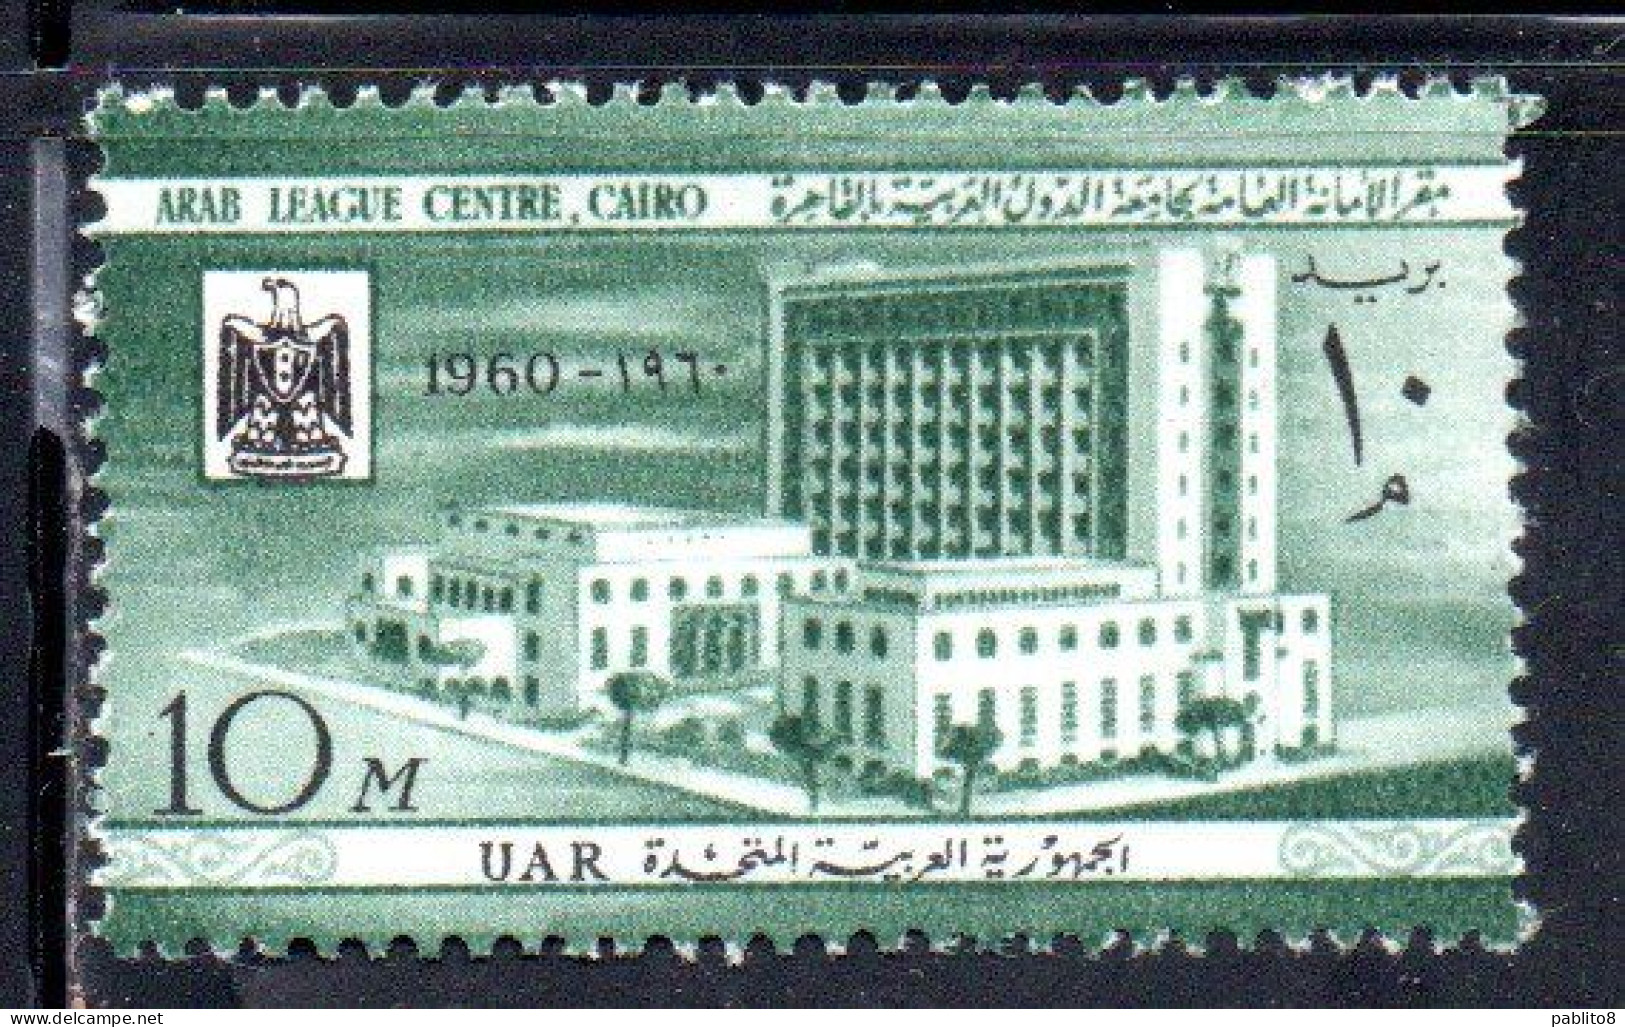 UAR EGYPT EGITTO 1960 OPEN ARAB LEAGUE CENTER AND POSTAL MUSEUM CAIRO 10m MNH - Unused Stamps